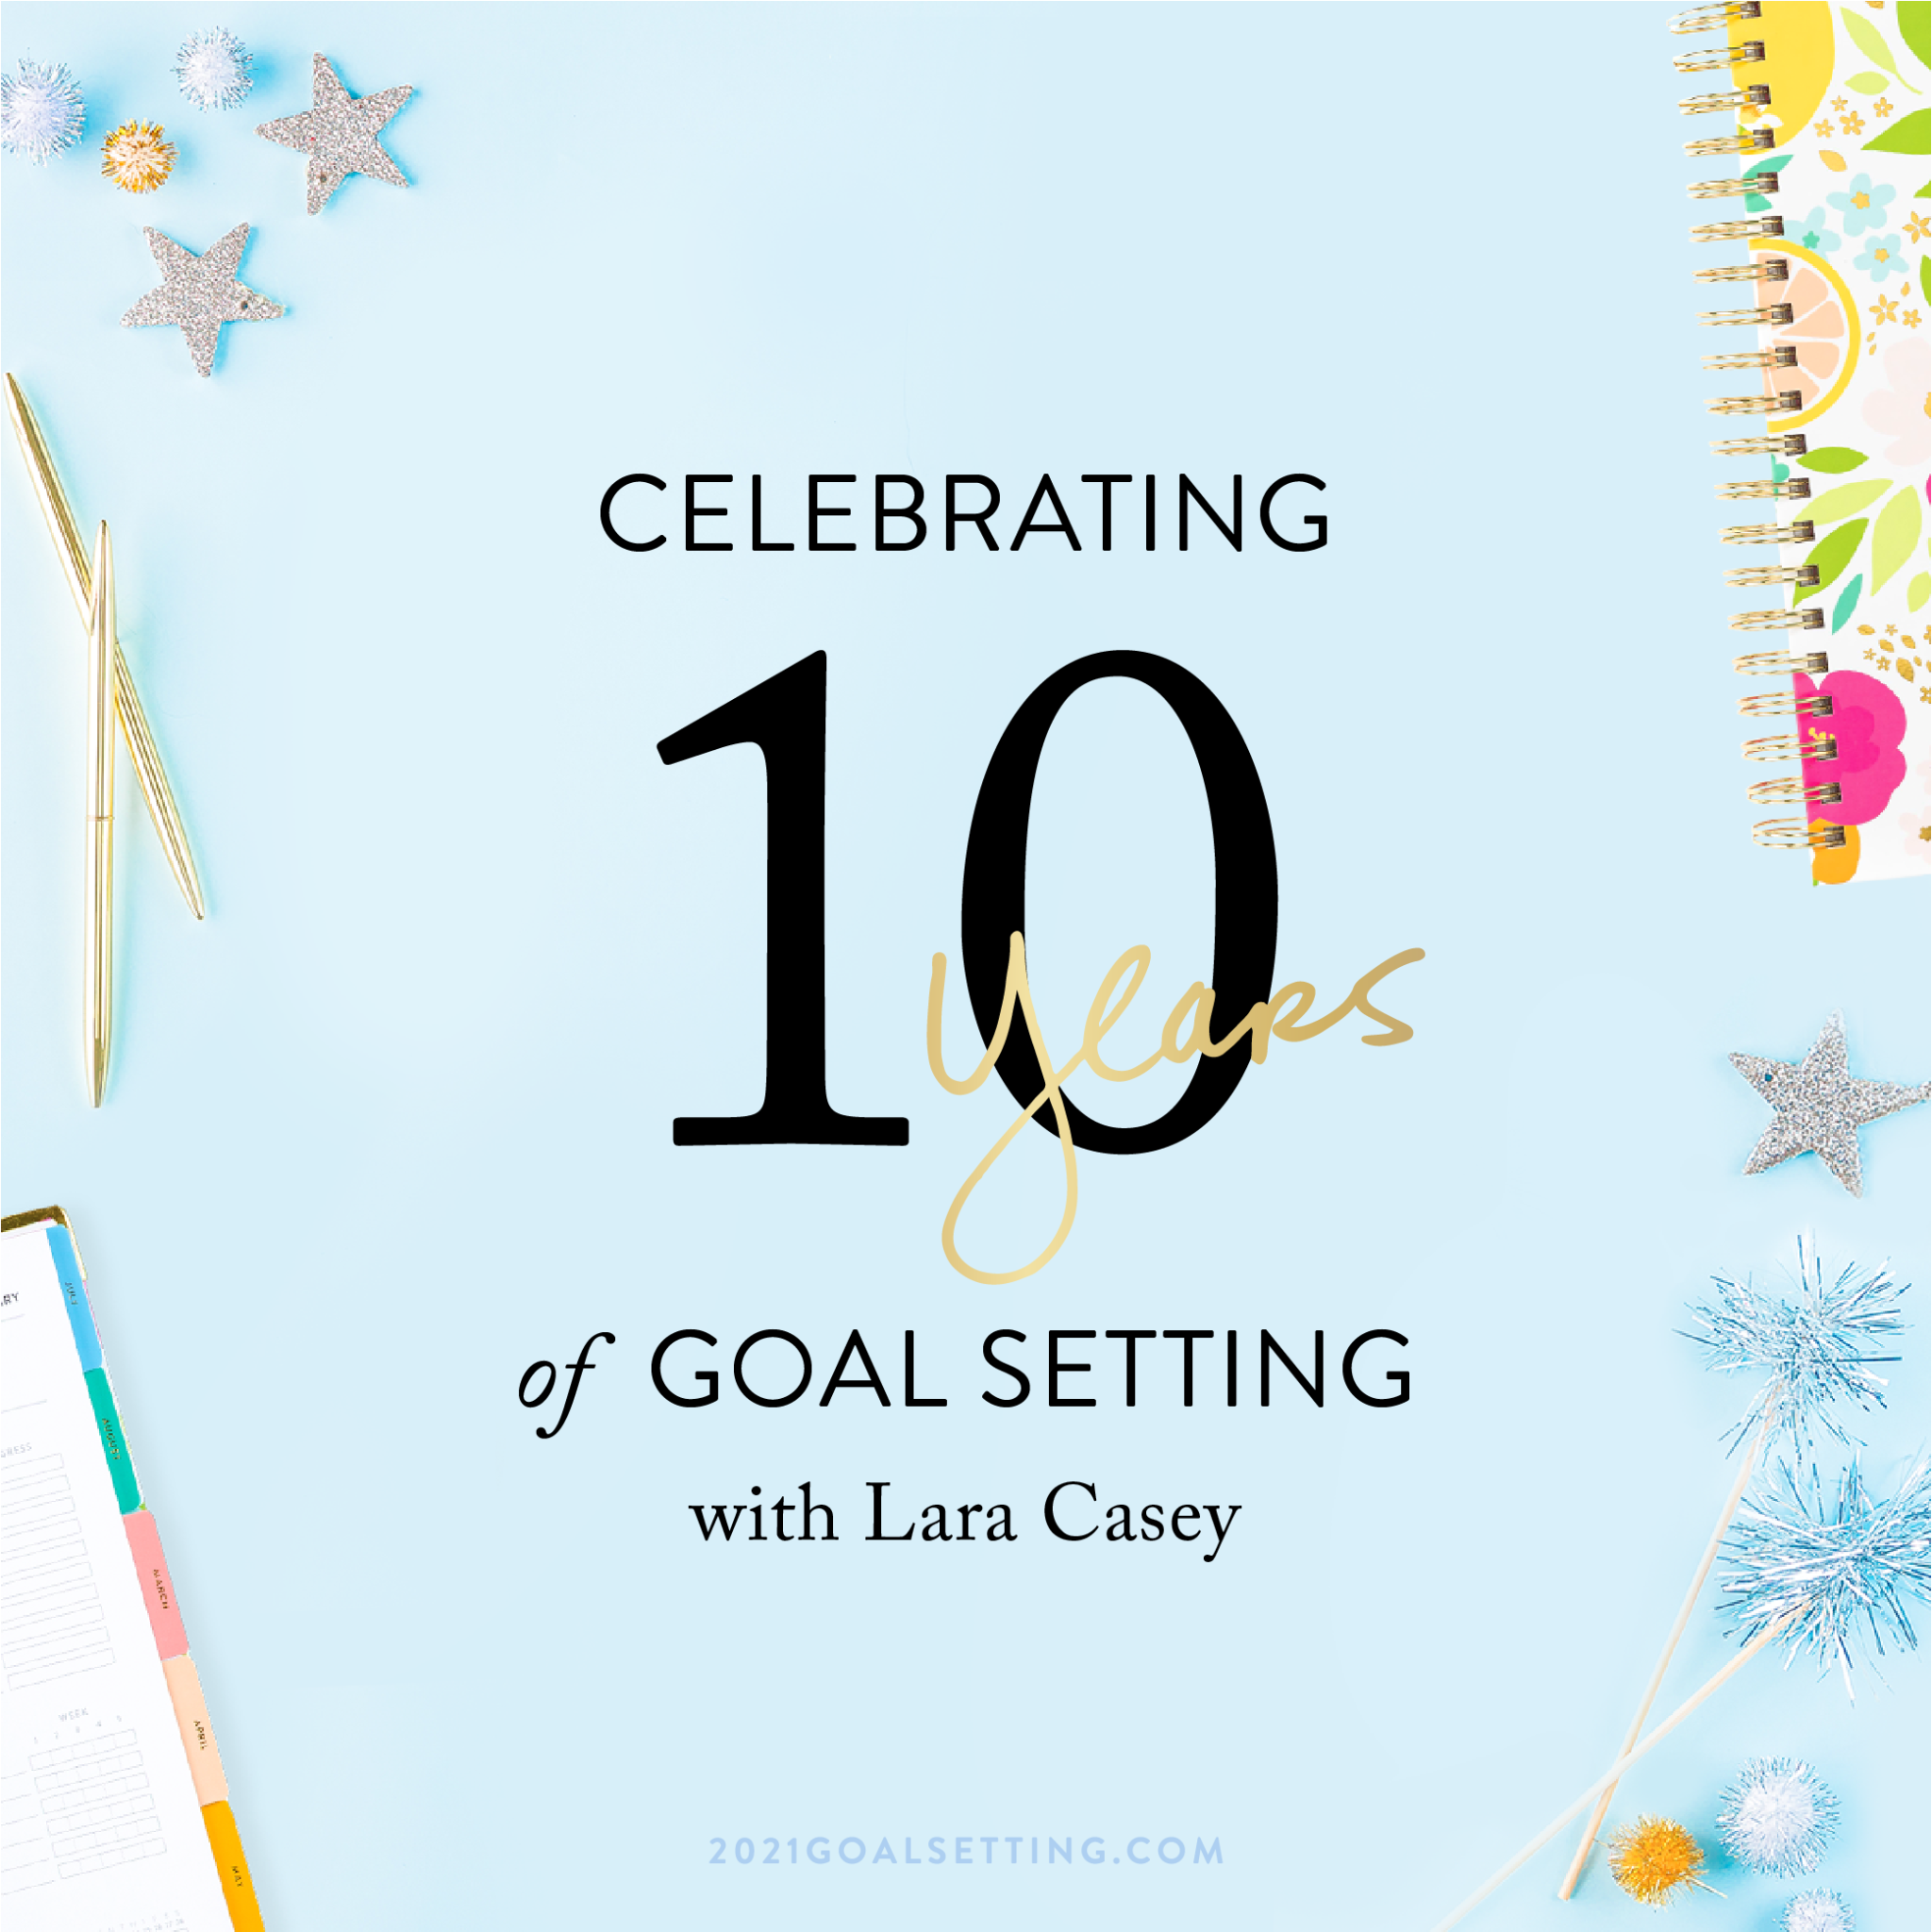 Goal Setting Series Celebrating 10 Years Together Laptrinhx News 5366